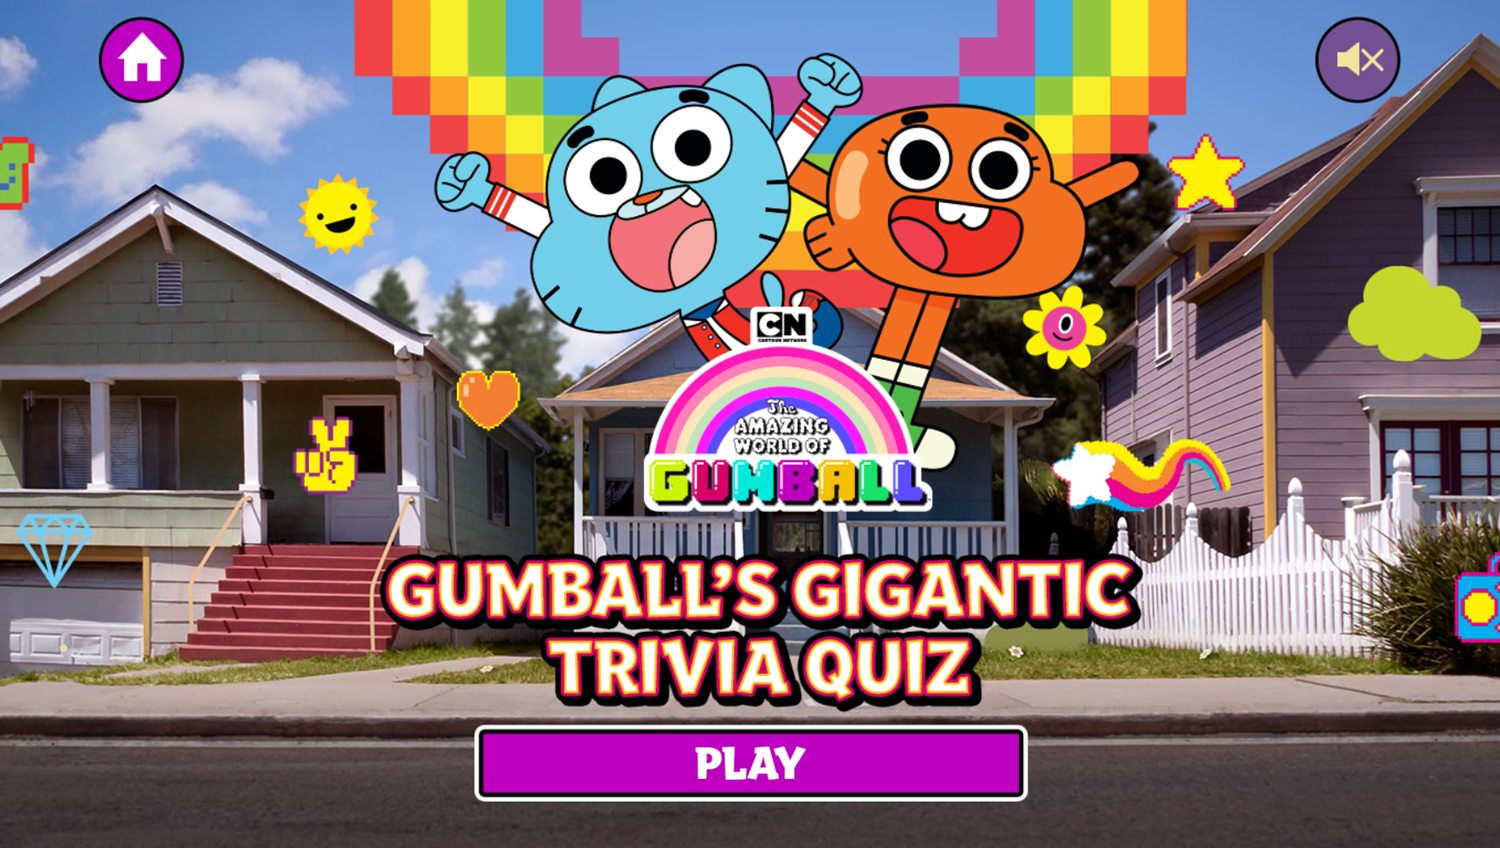 Amazing World of Gumball Gumball's Gigantic Trivia Quiz Game Welcome Screen Screenshot.